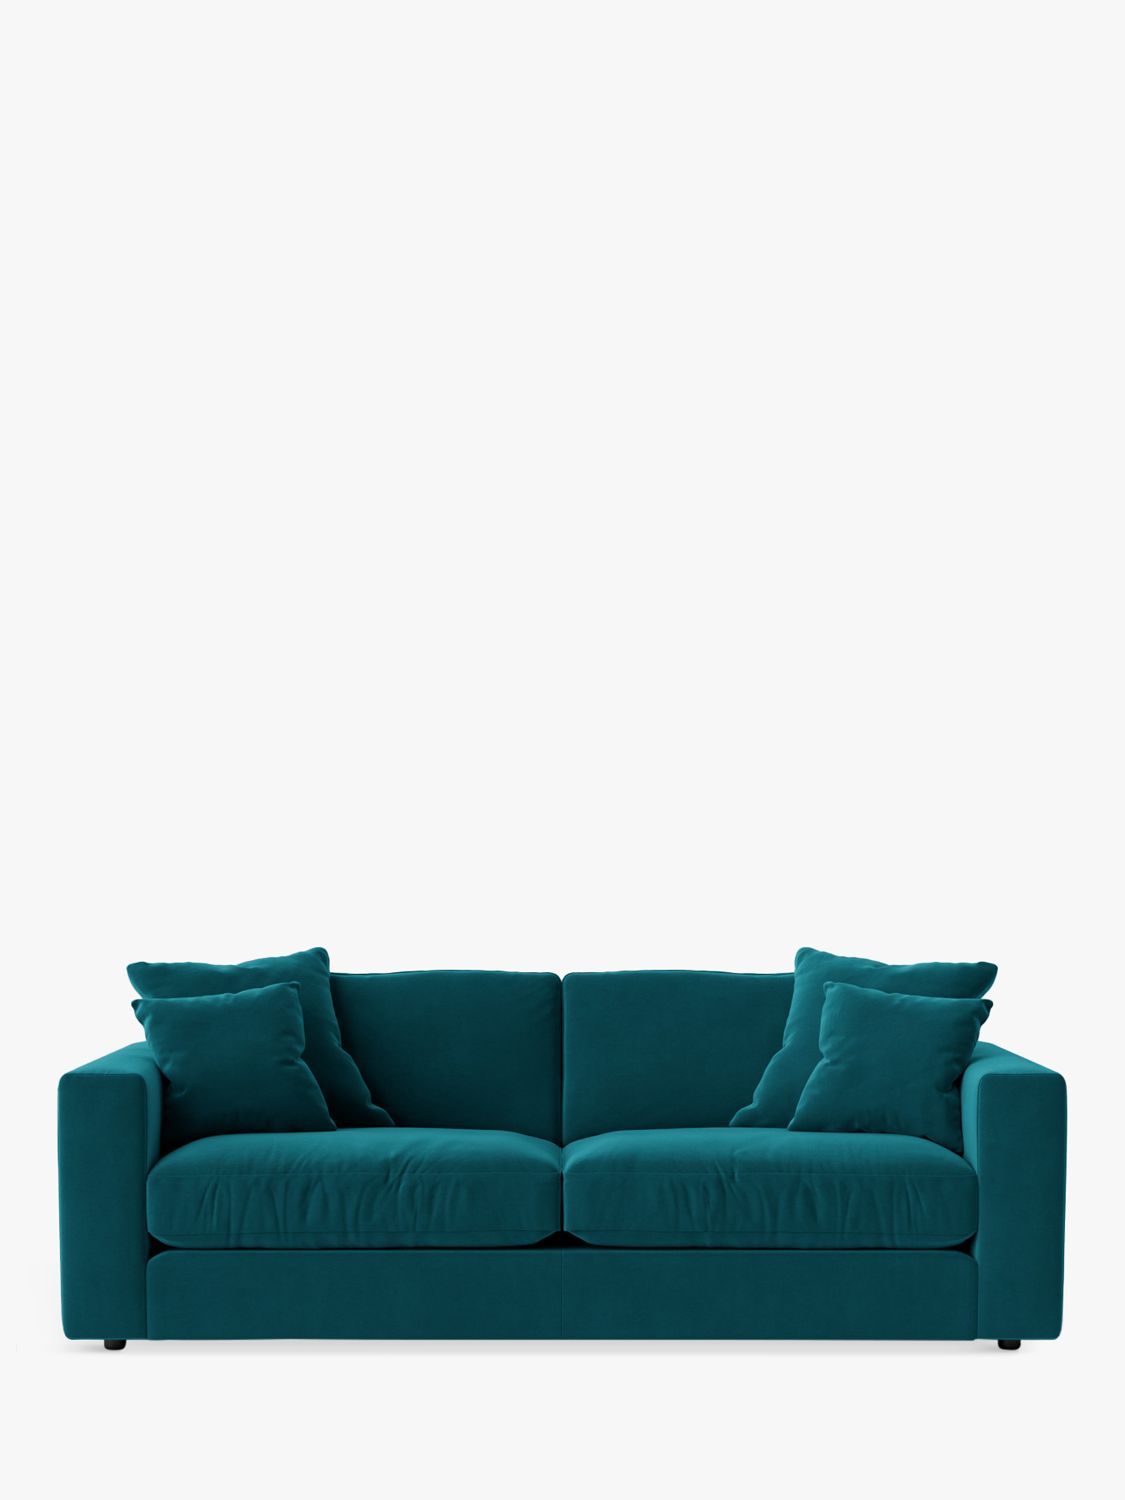 Althaea Range, Swoon Althaea Large 3 Seater Sofa, Easy Velvet Kingfisher